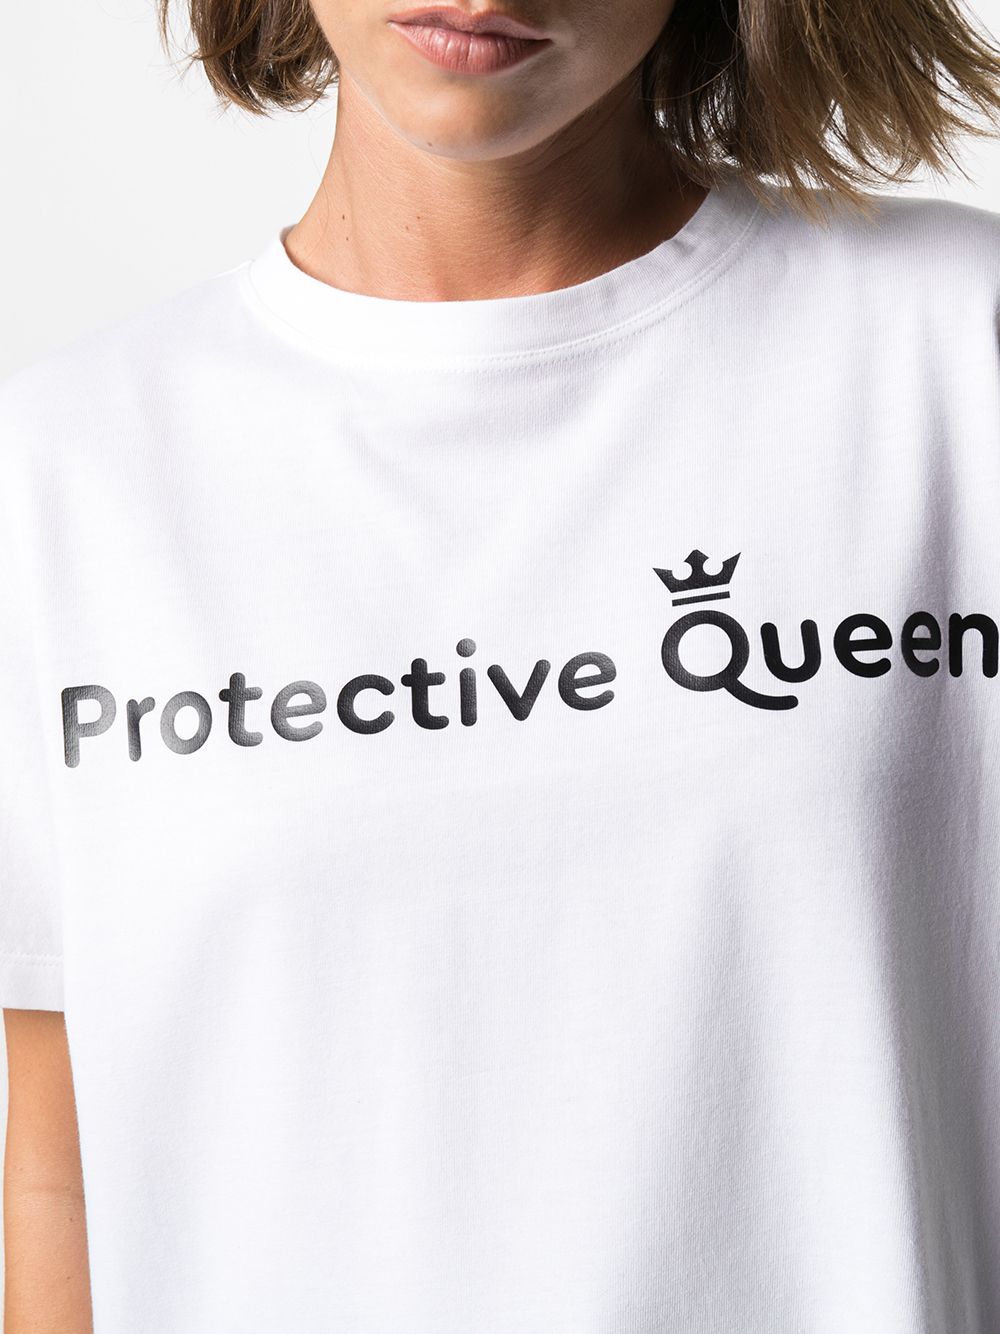 фото Parlor футболка protective queen